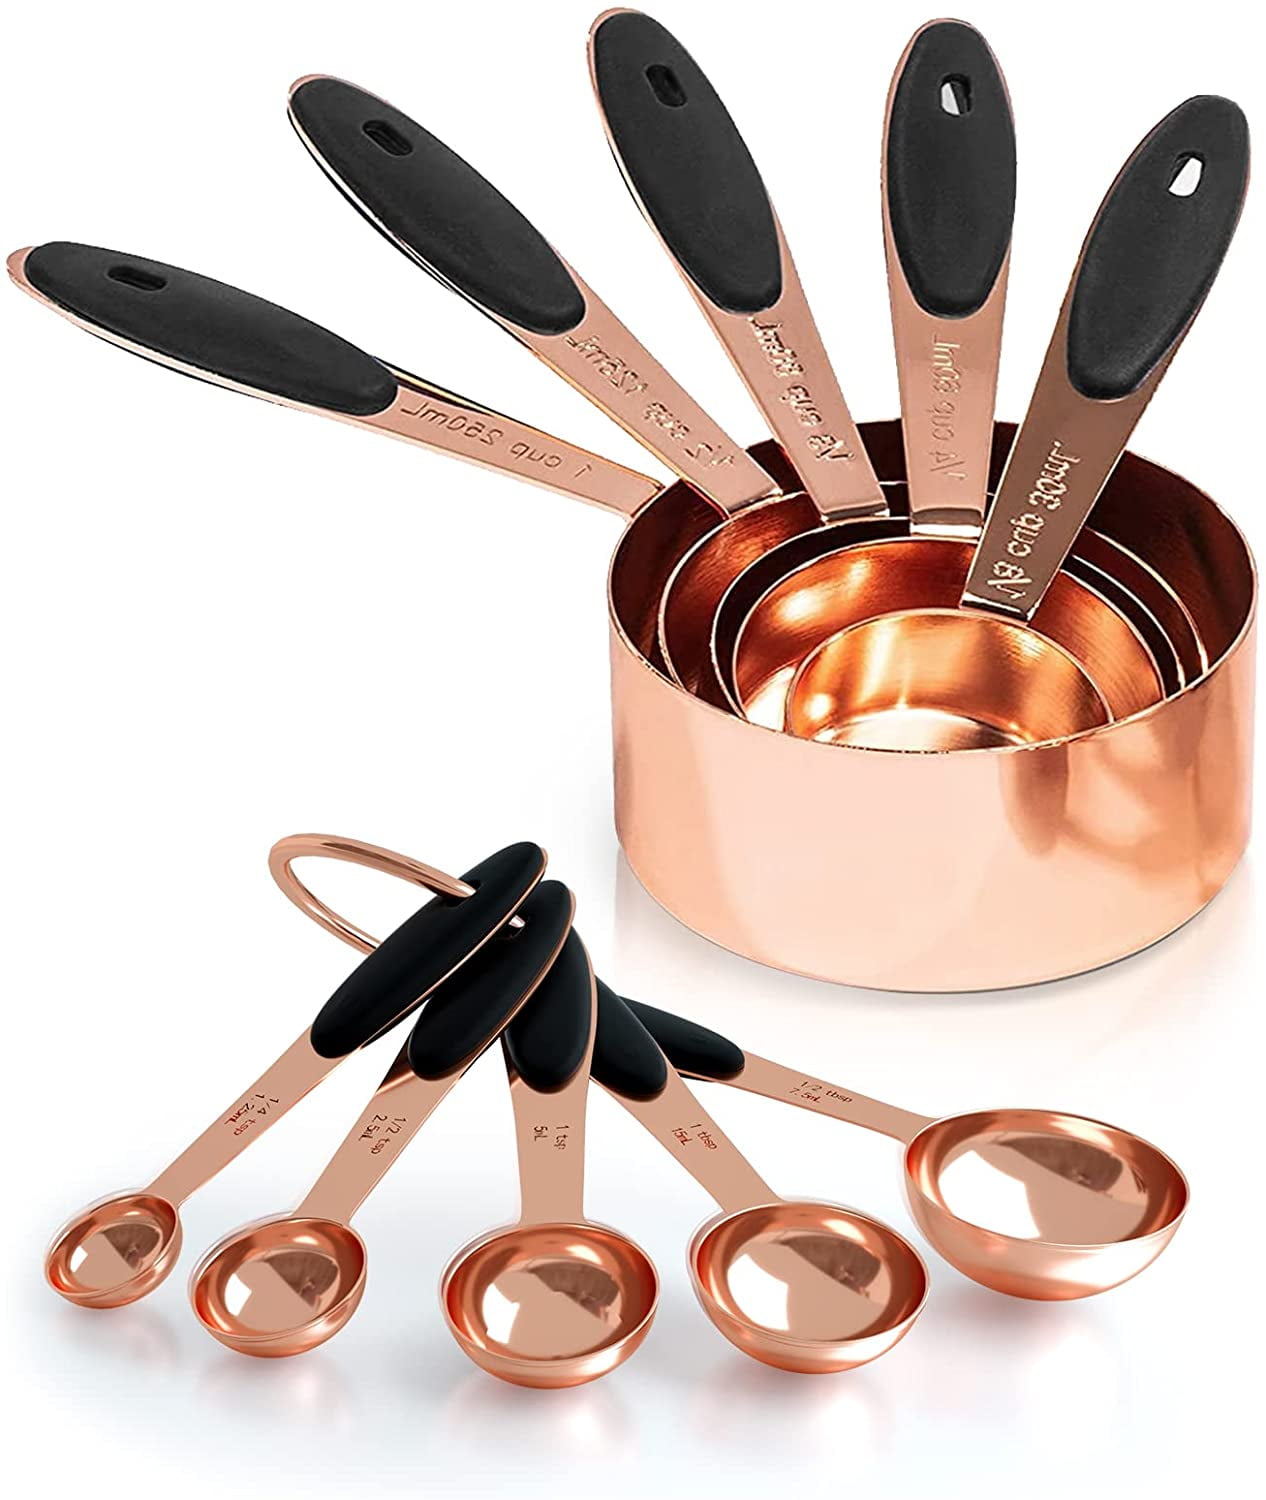 Stainless Steel Measuring Spoons, Set Of 10 Kitchen Measuring Spoons, Measuring  Cups With Handles, Measuring Spoon For Measuring Dry And Liquid Ingred